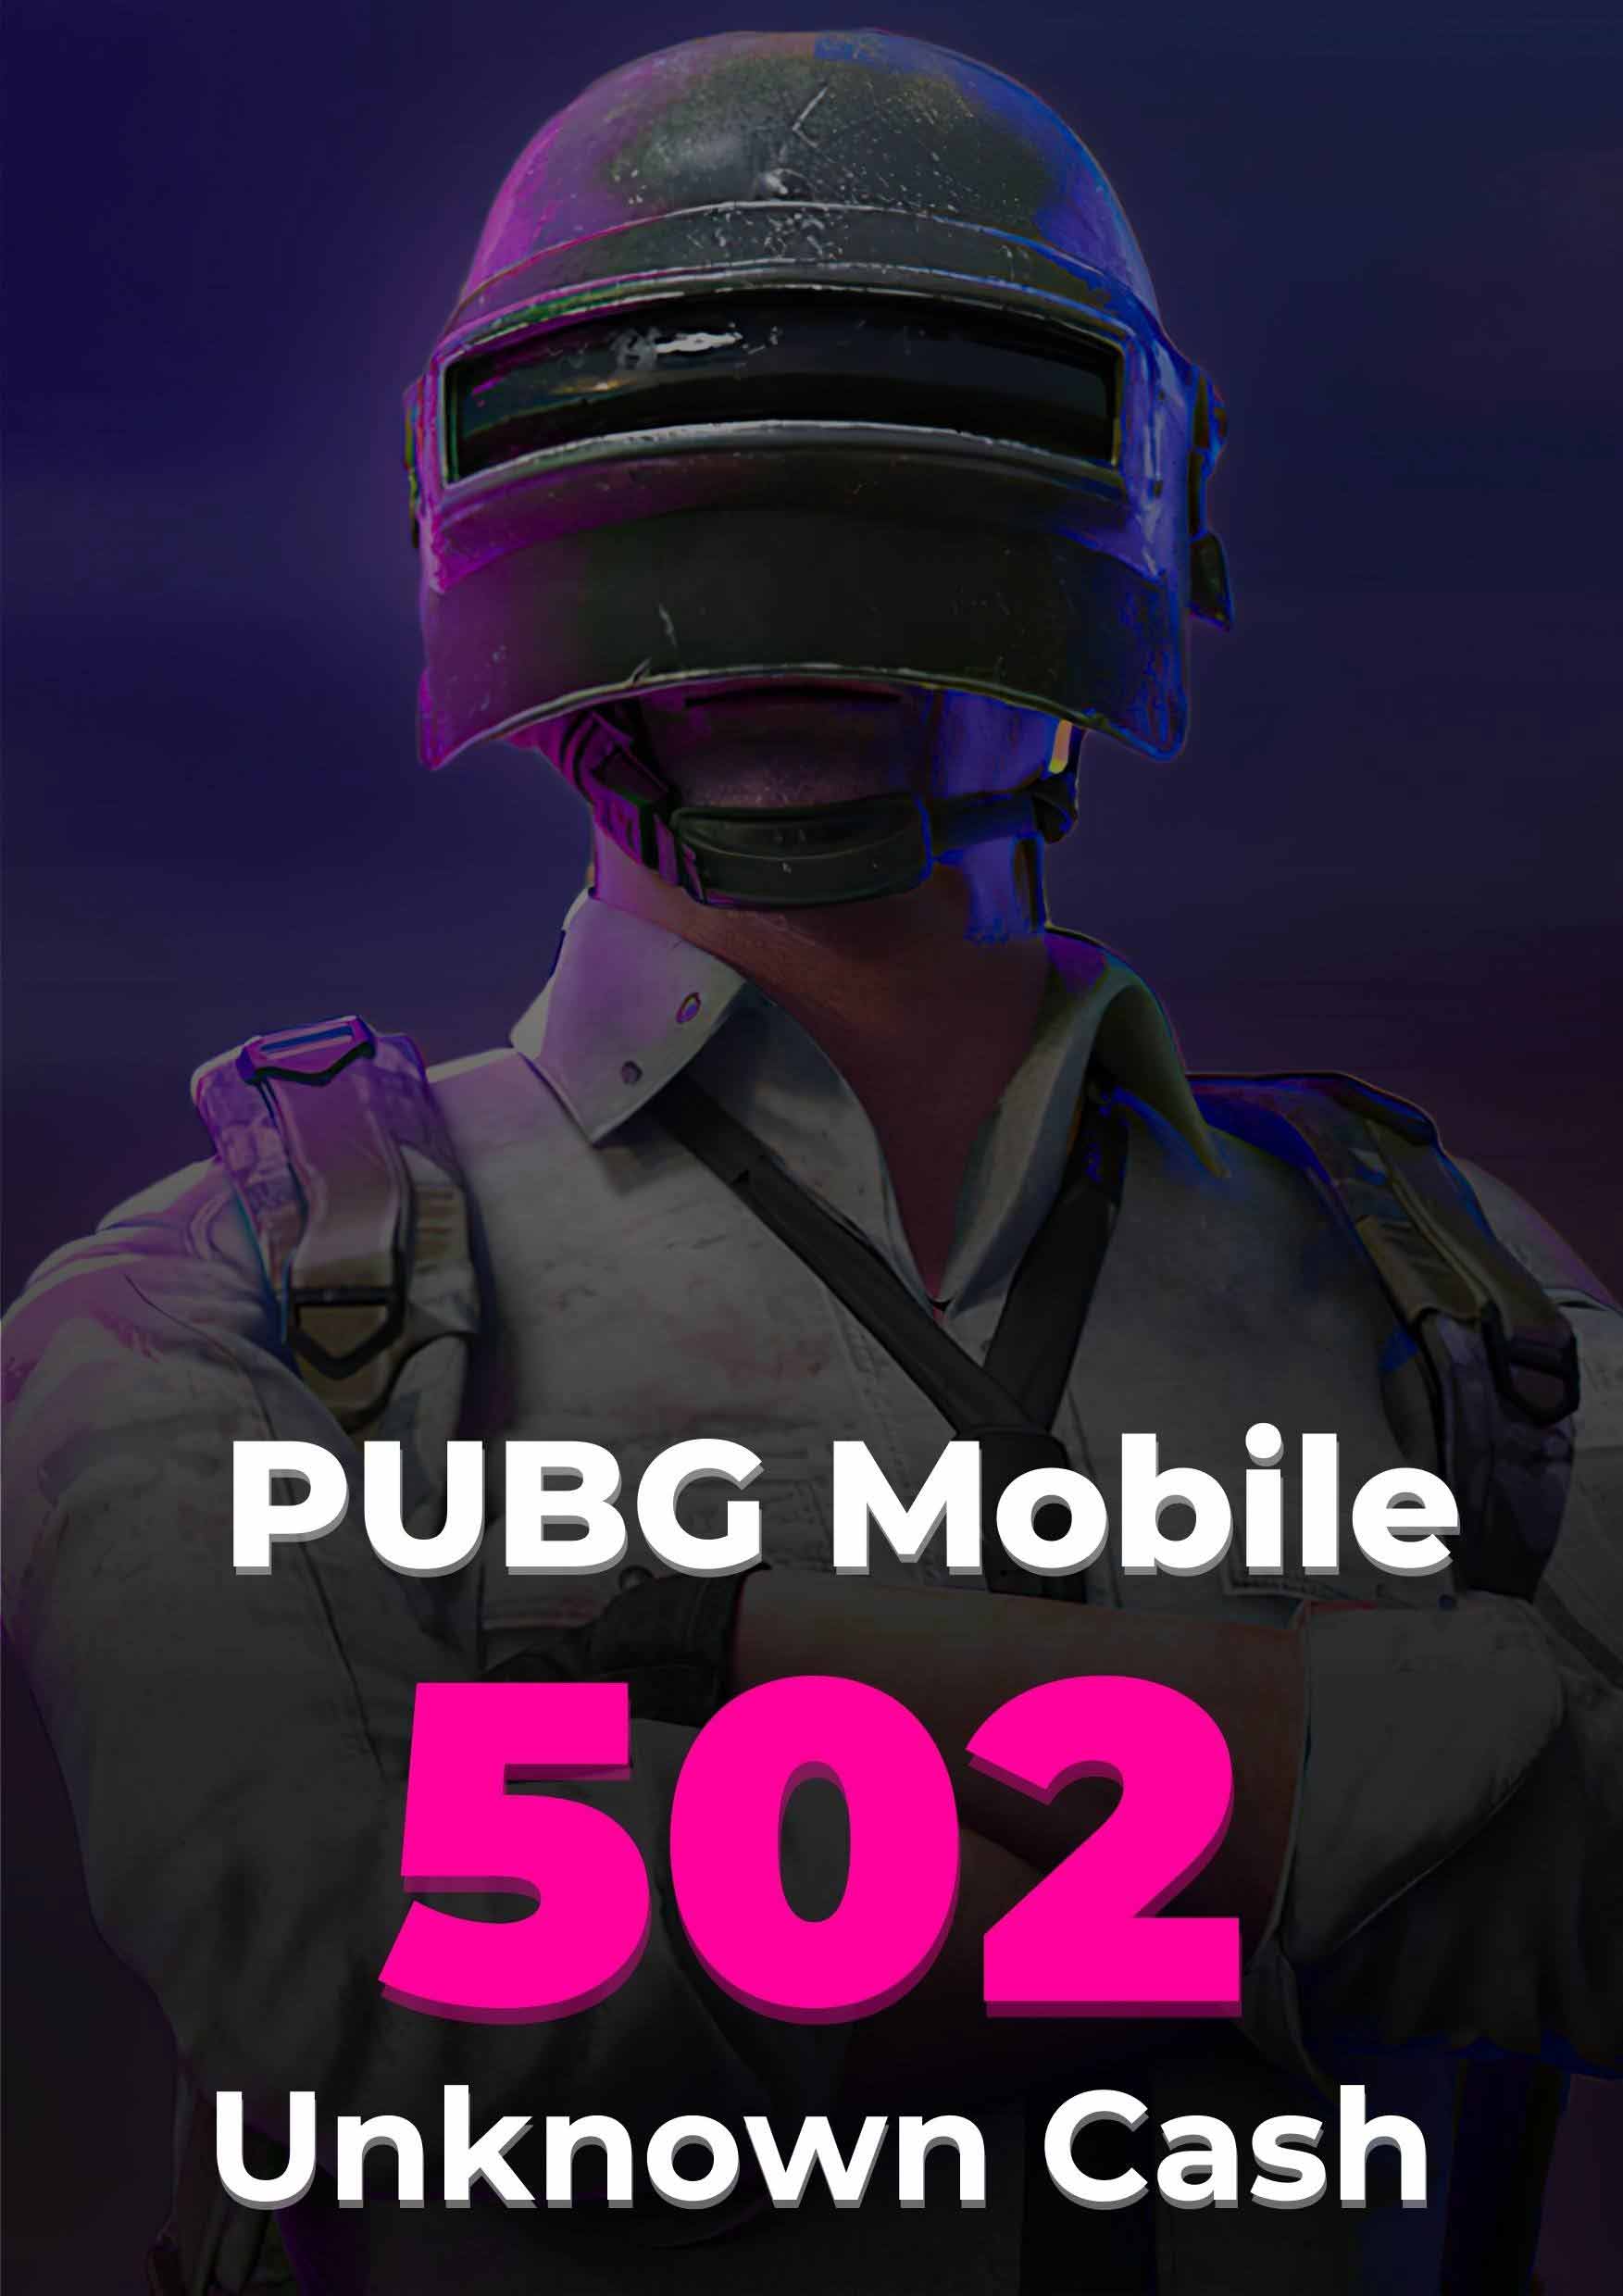 PUBG Mobile 502 UC